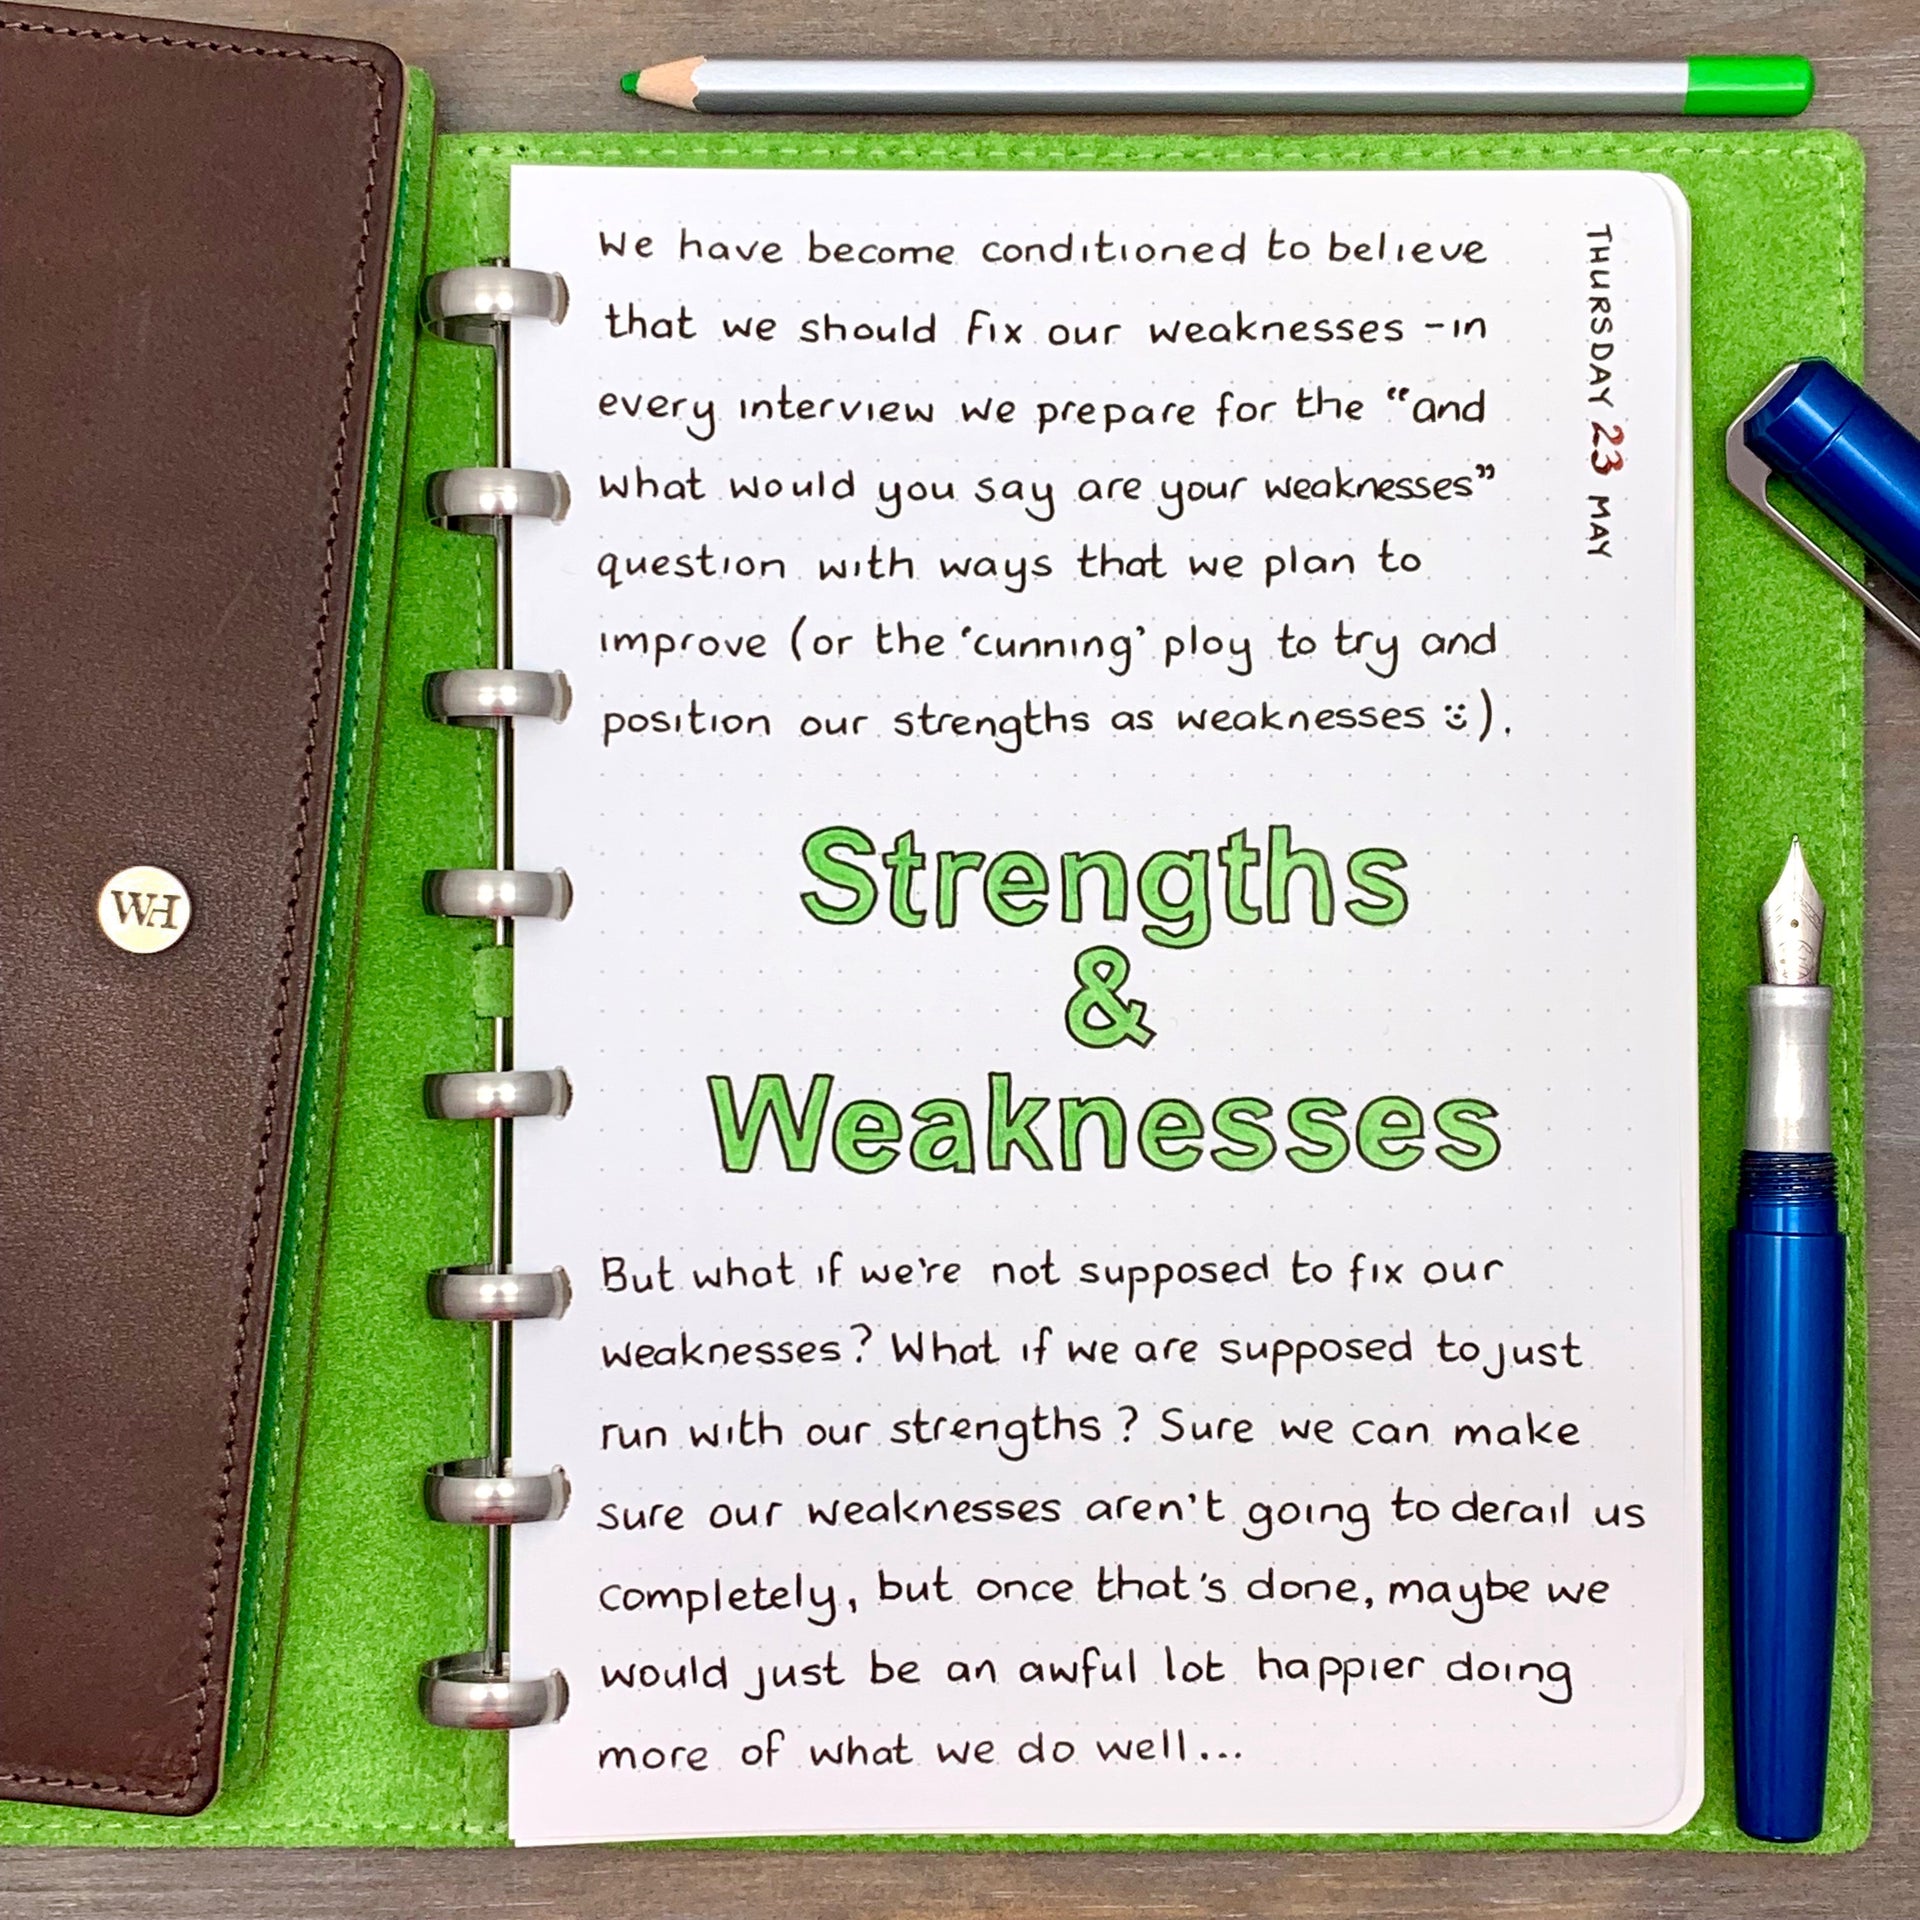 Strengths & Weaknesses...